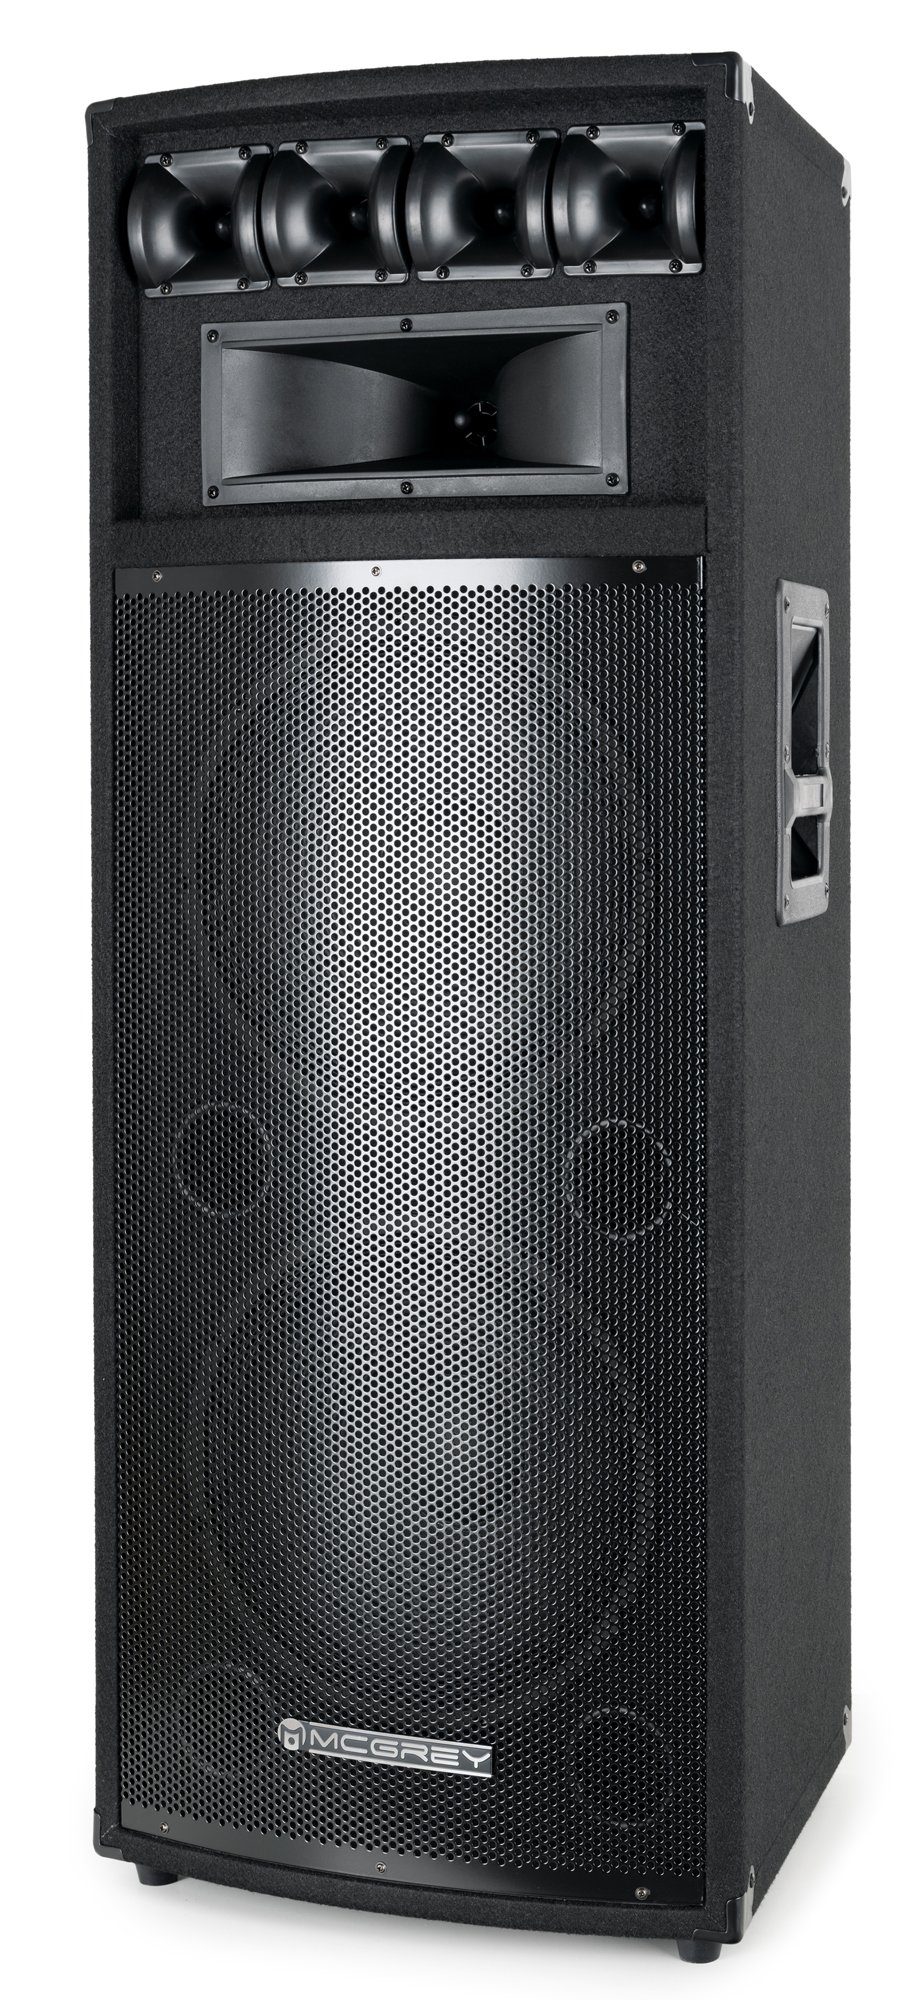 McGrey PowerDJ 2-Etagen DJ PA Box Tower Party-Lautsprecher (N/A, 200 W, 2x 30cm (12 zoll) Subwoofer 2-Wege System, Holzgehäuse) | Lautsprecher